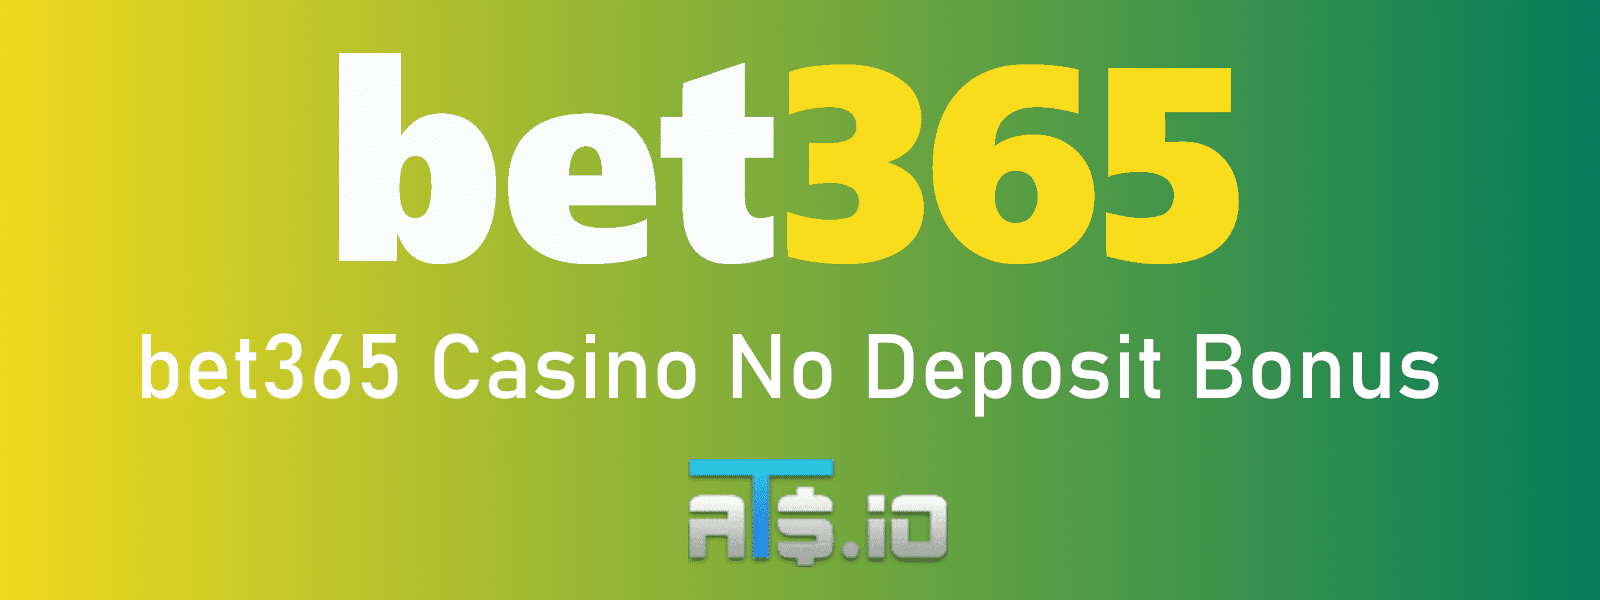 bet365 casino no deposit bonus